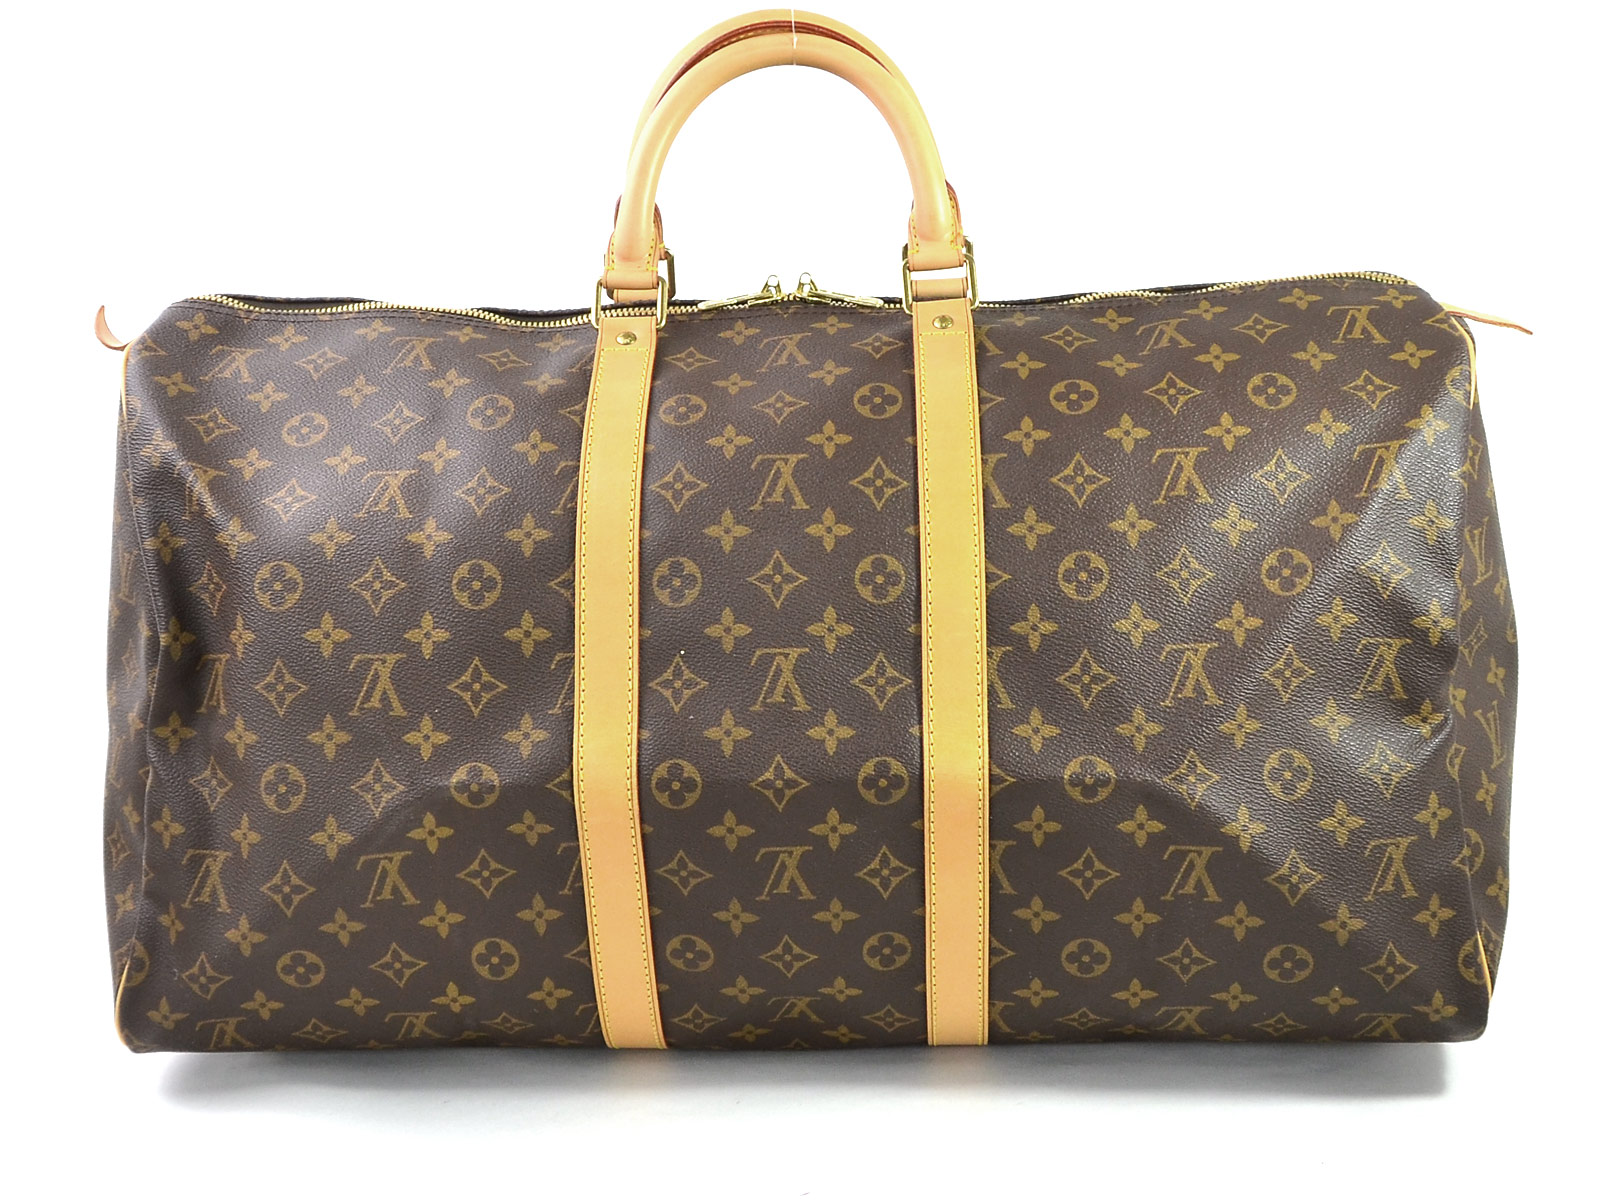 Auth Louis Vuitton Monogram Keepall 55 Handbag Travel Bag Brown M41424 - 97460 | eBay